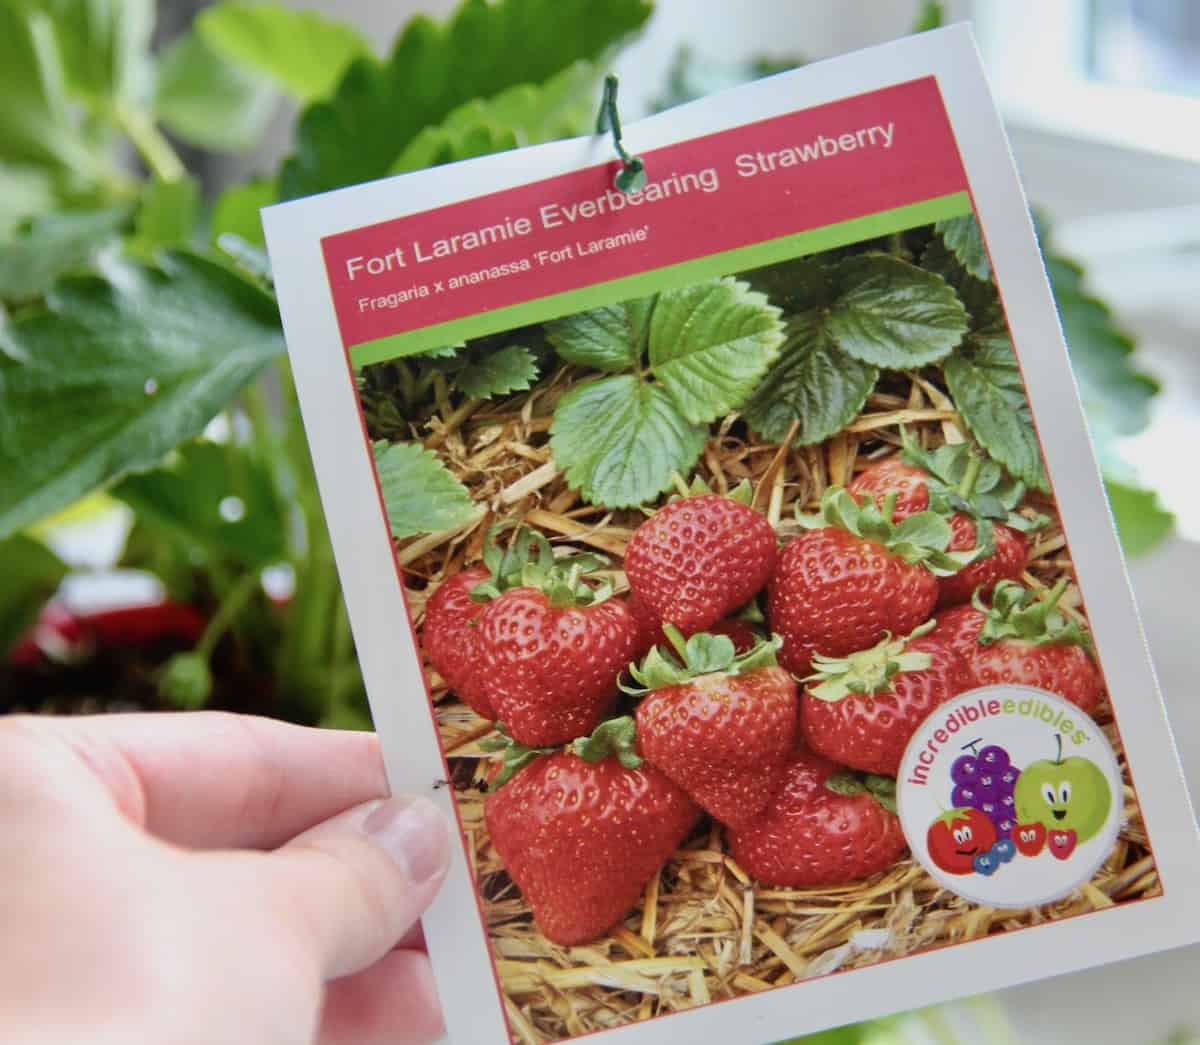 Tag for fort laramie strawberry plant